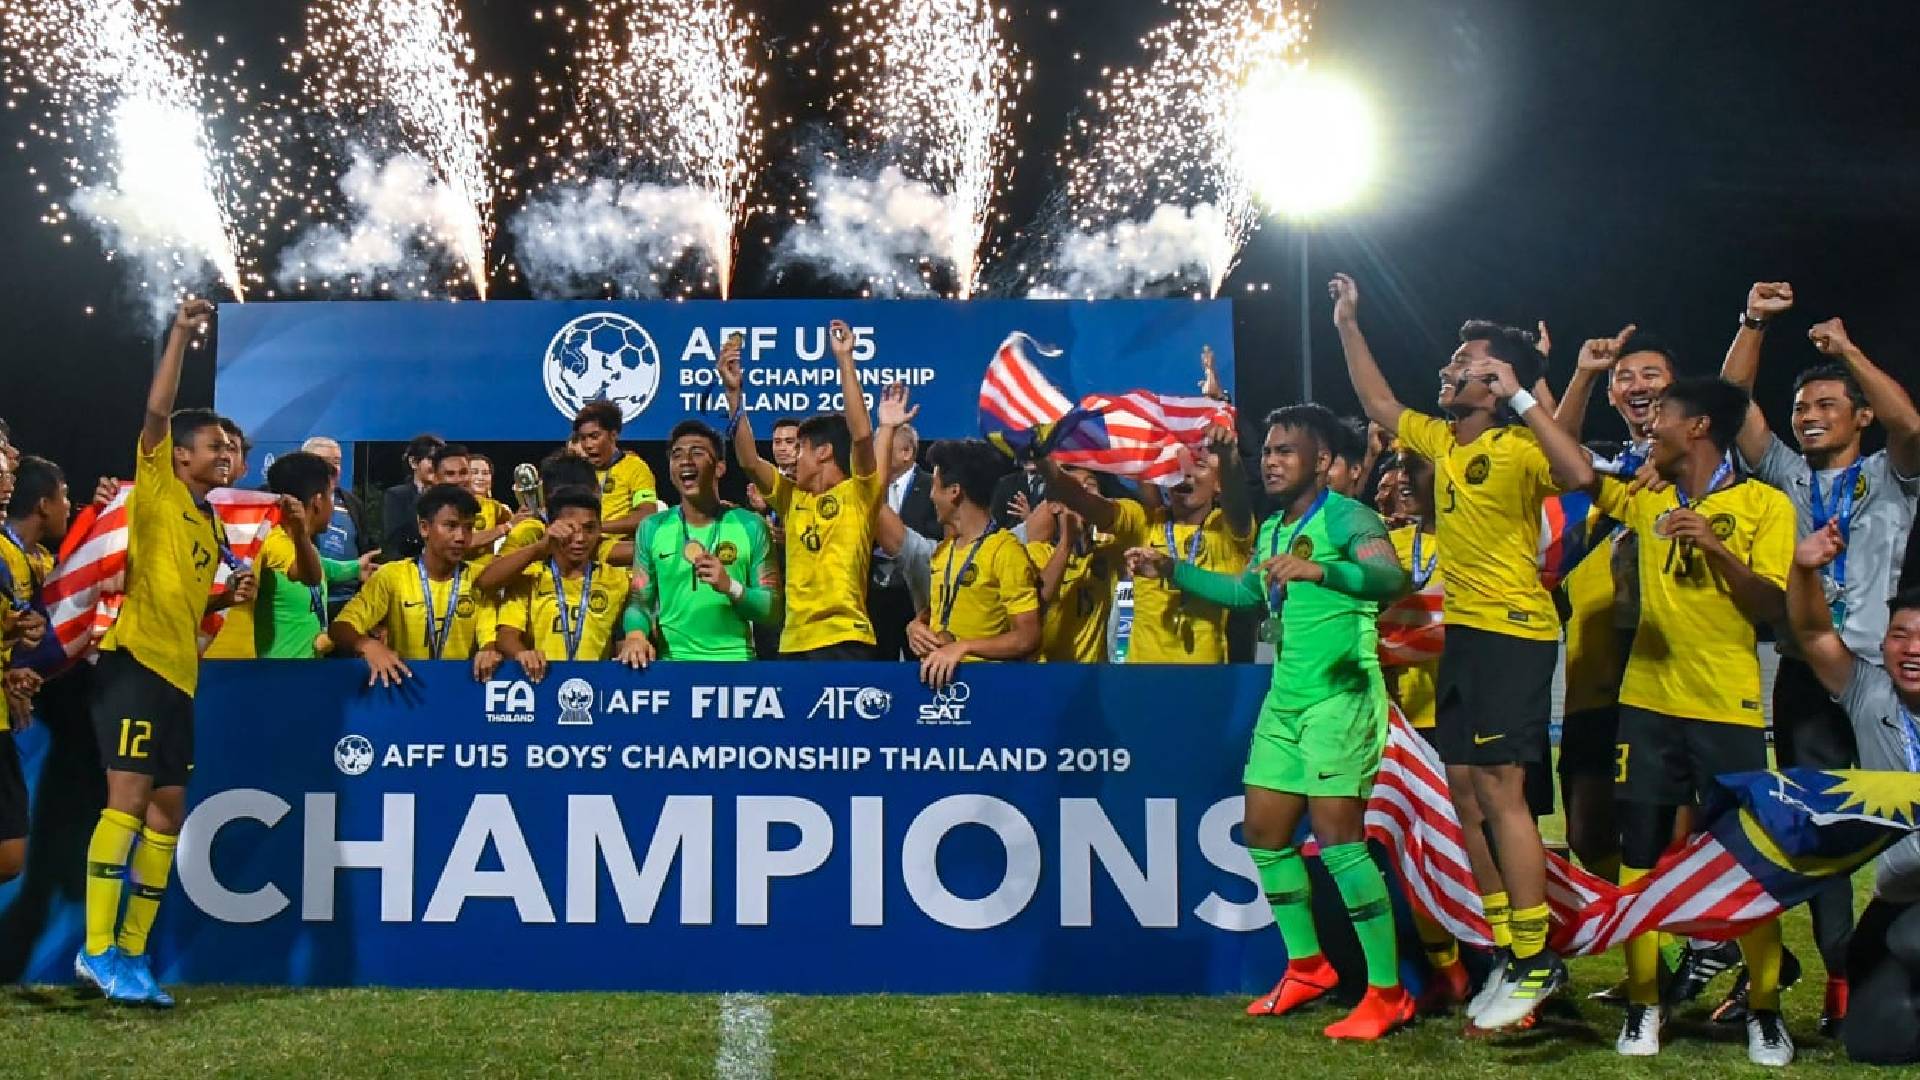 malaysia aff undder 15 2019 Kisah Kebangkitan Saat Akhir Julang Malaysia Di Kejohanan AFF B-15